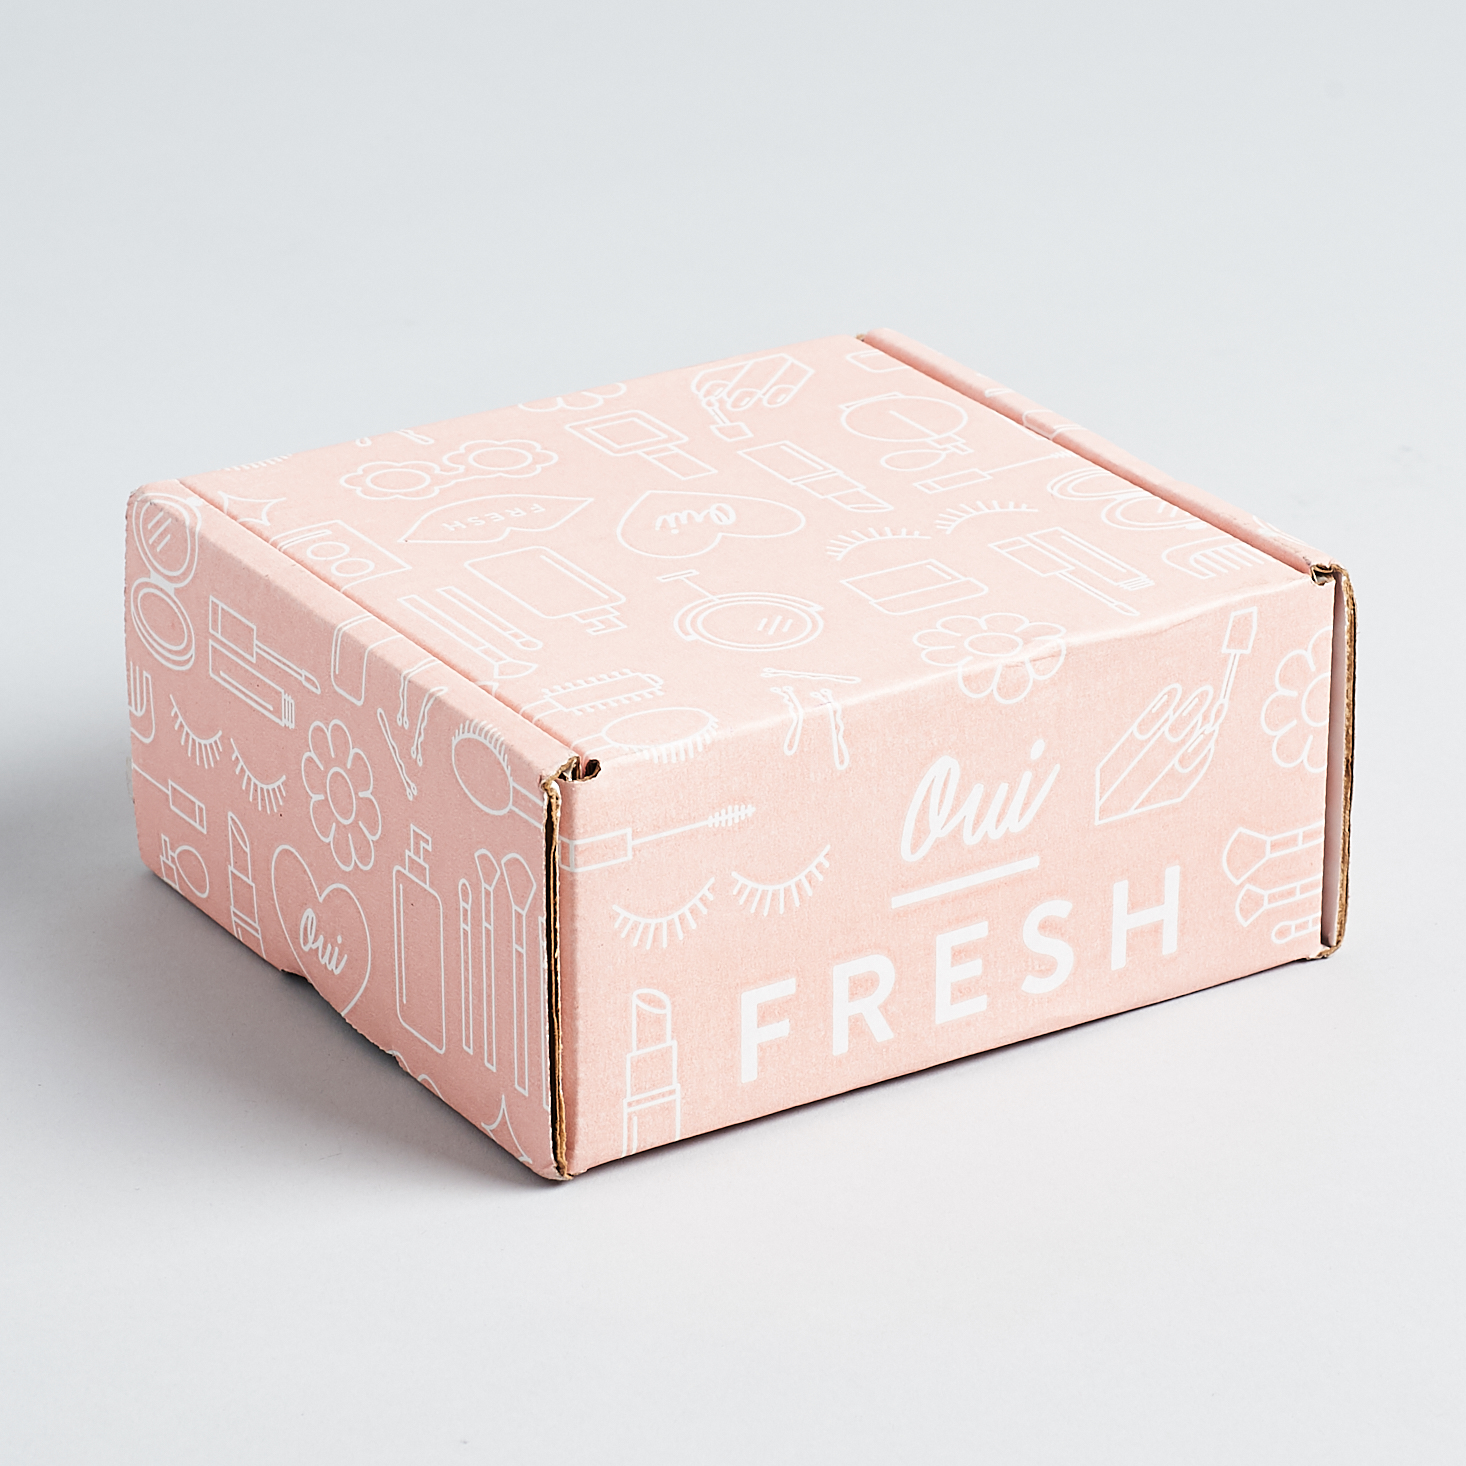 Oui Fresh Beauty Box Review – July 2019